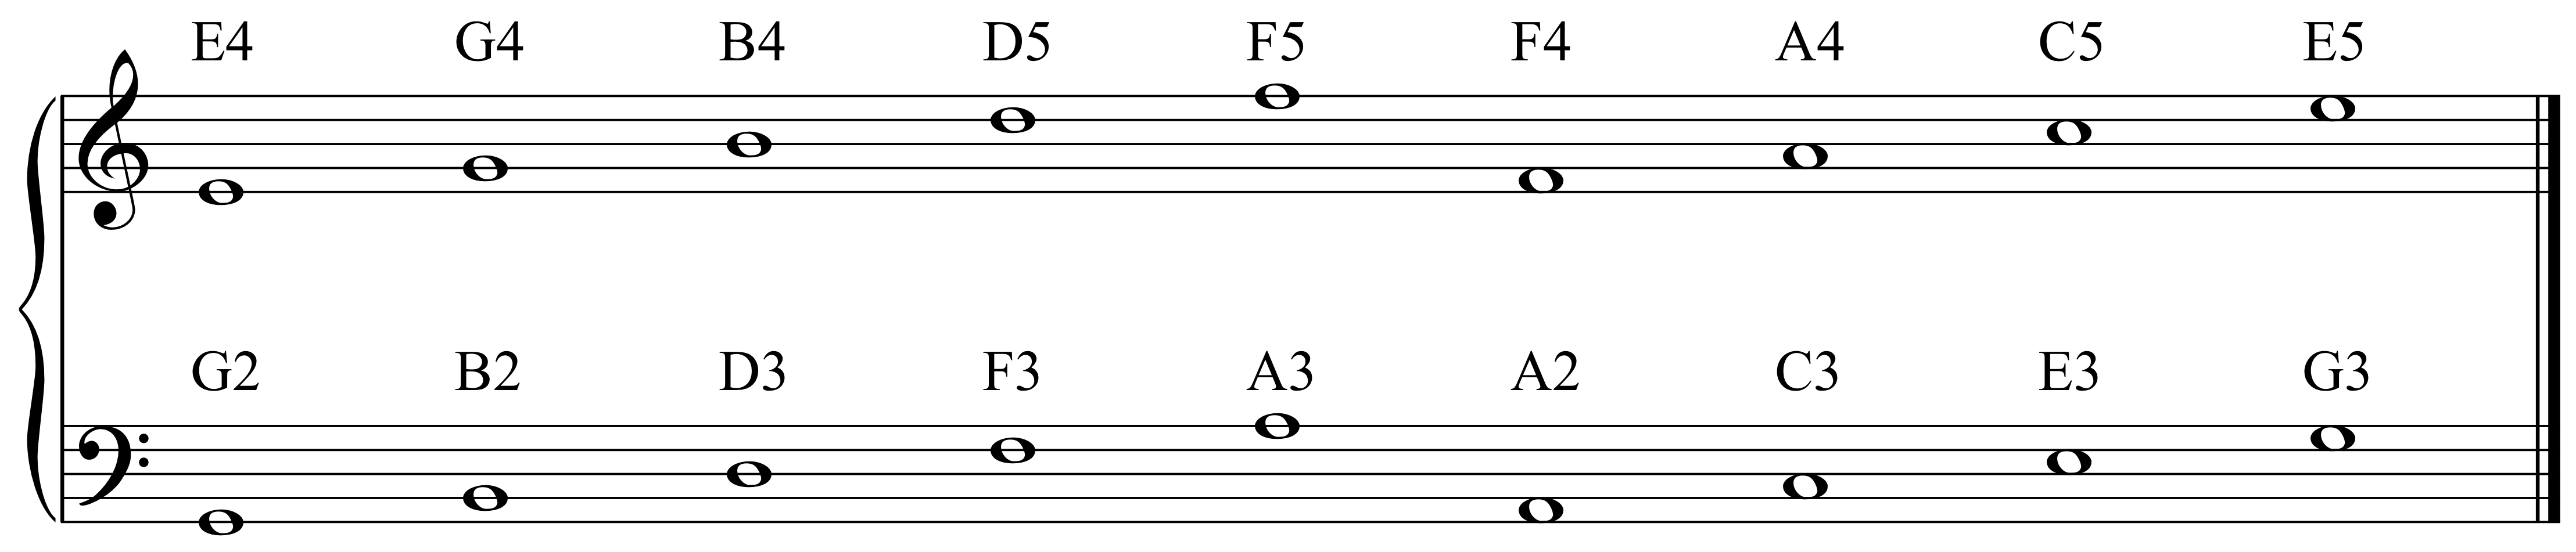 note-names-and-clefs-david-kulma